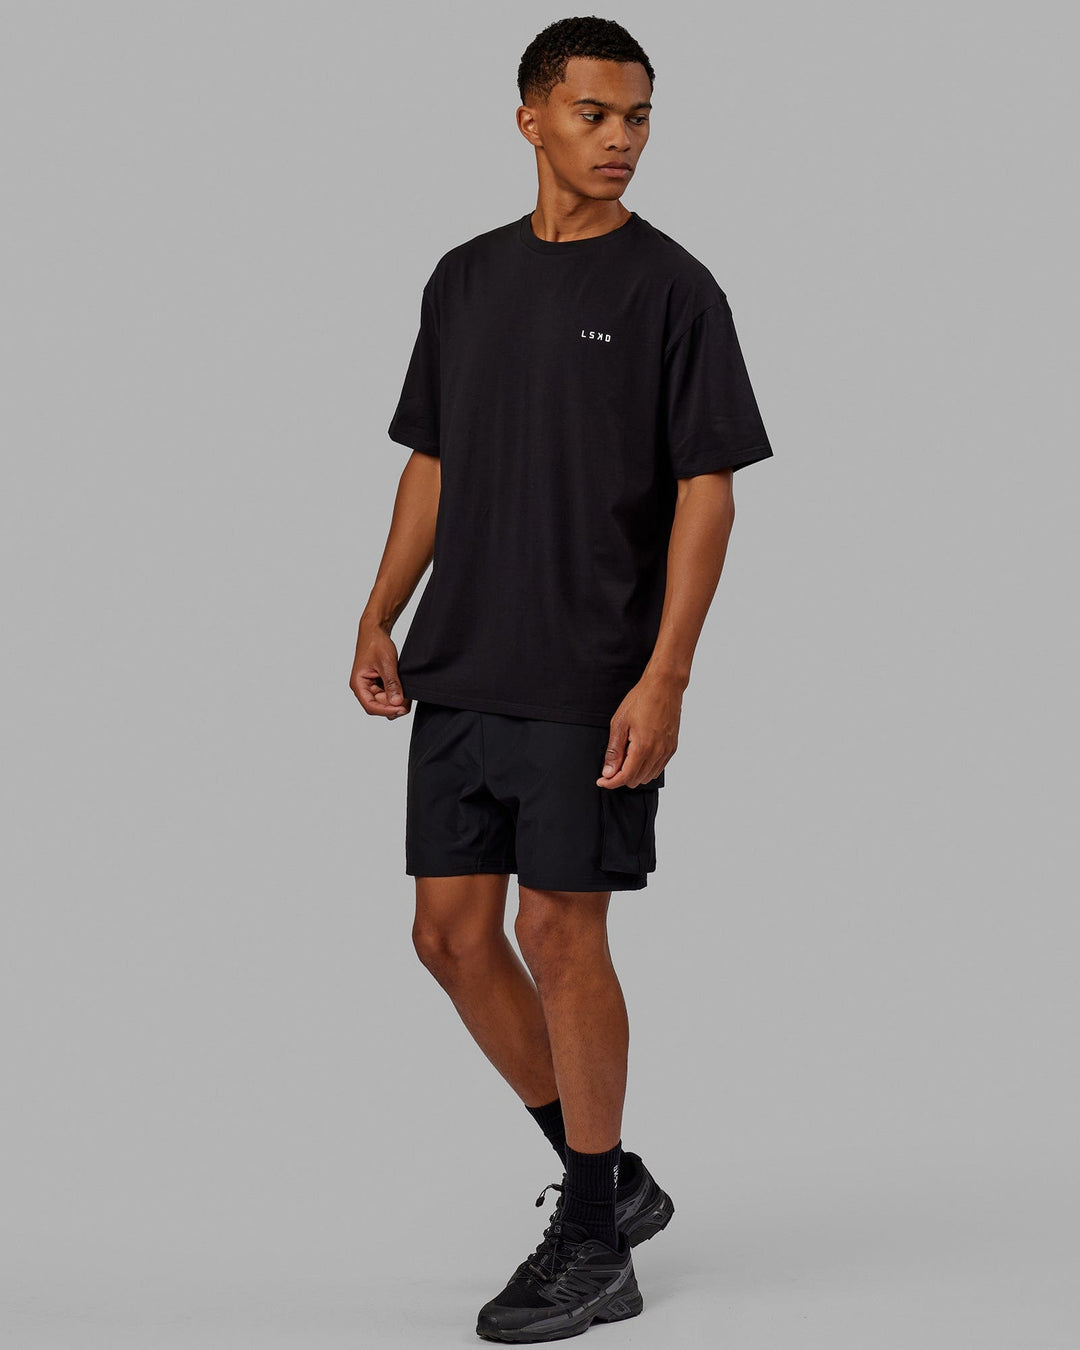 Man wearing VS1 FLXCotton Tee Oversize - Black-White